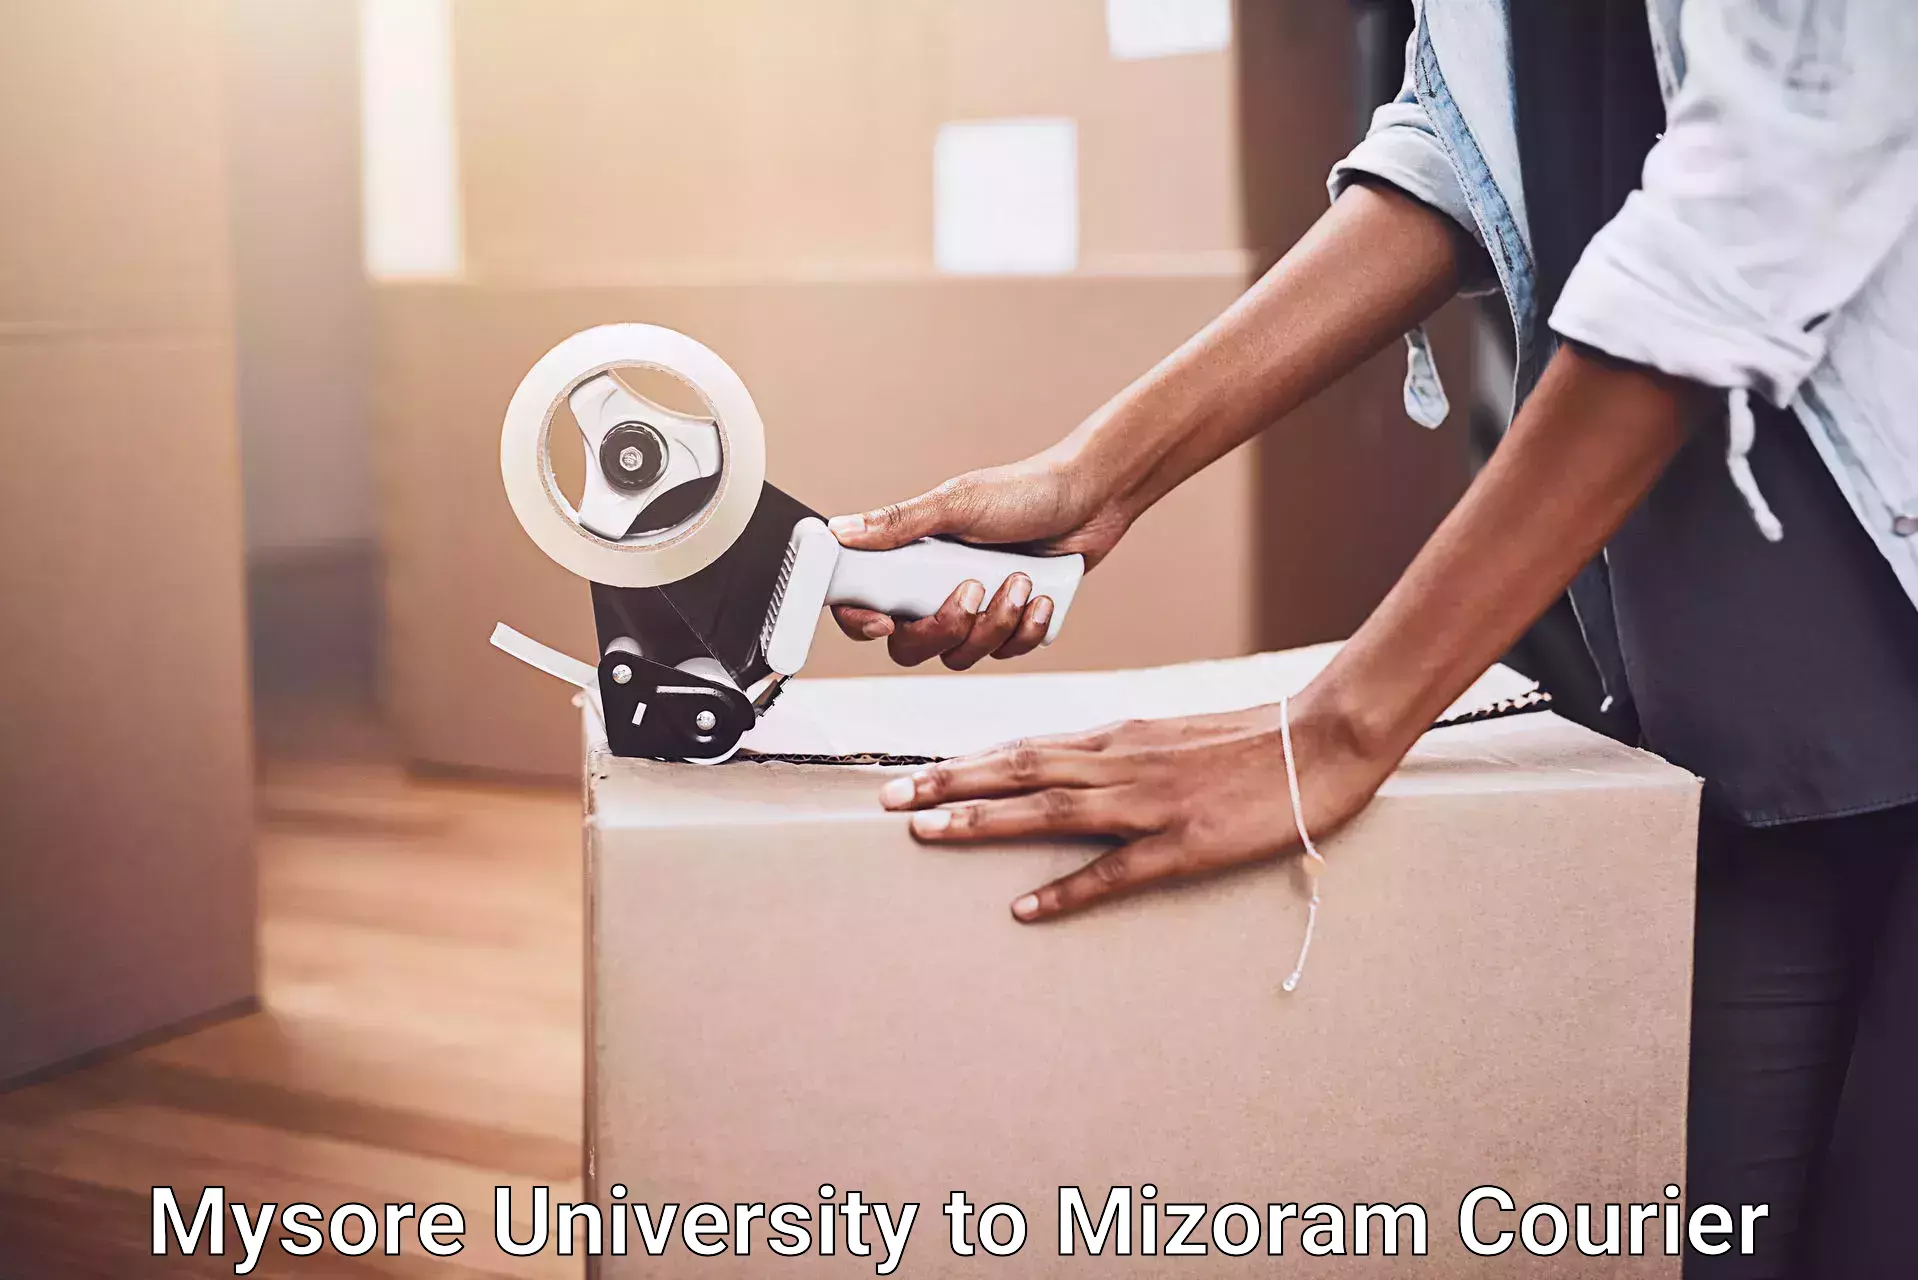 Home goods moving company Mysore University to Mizoram